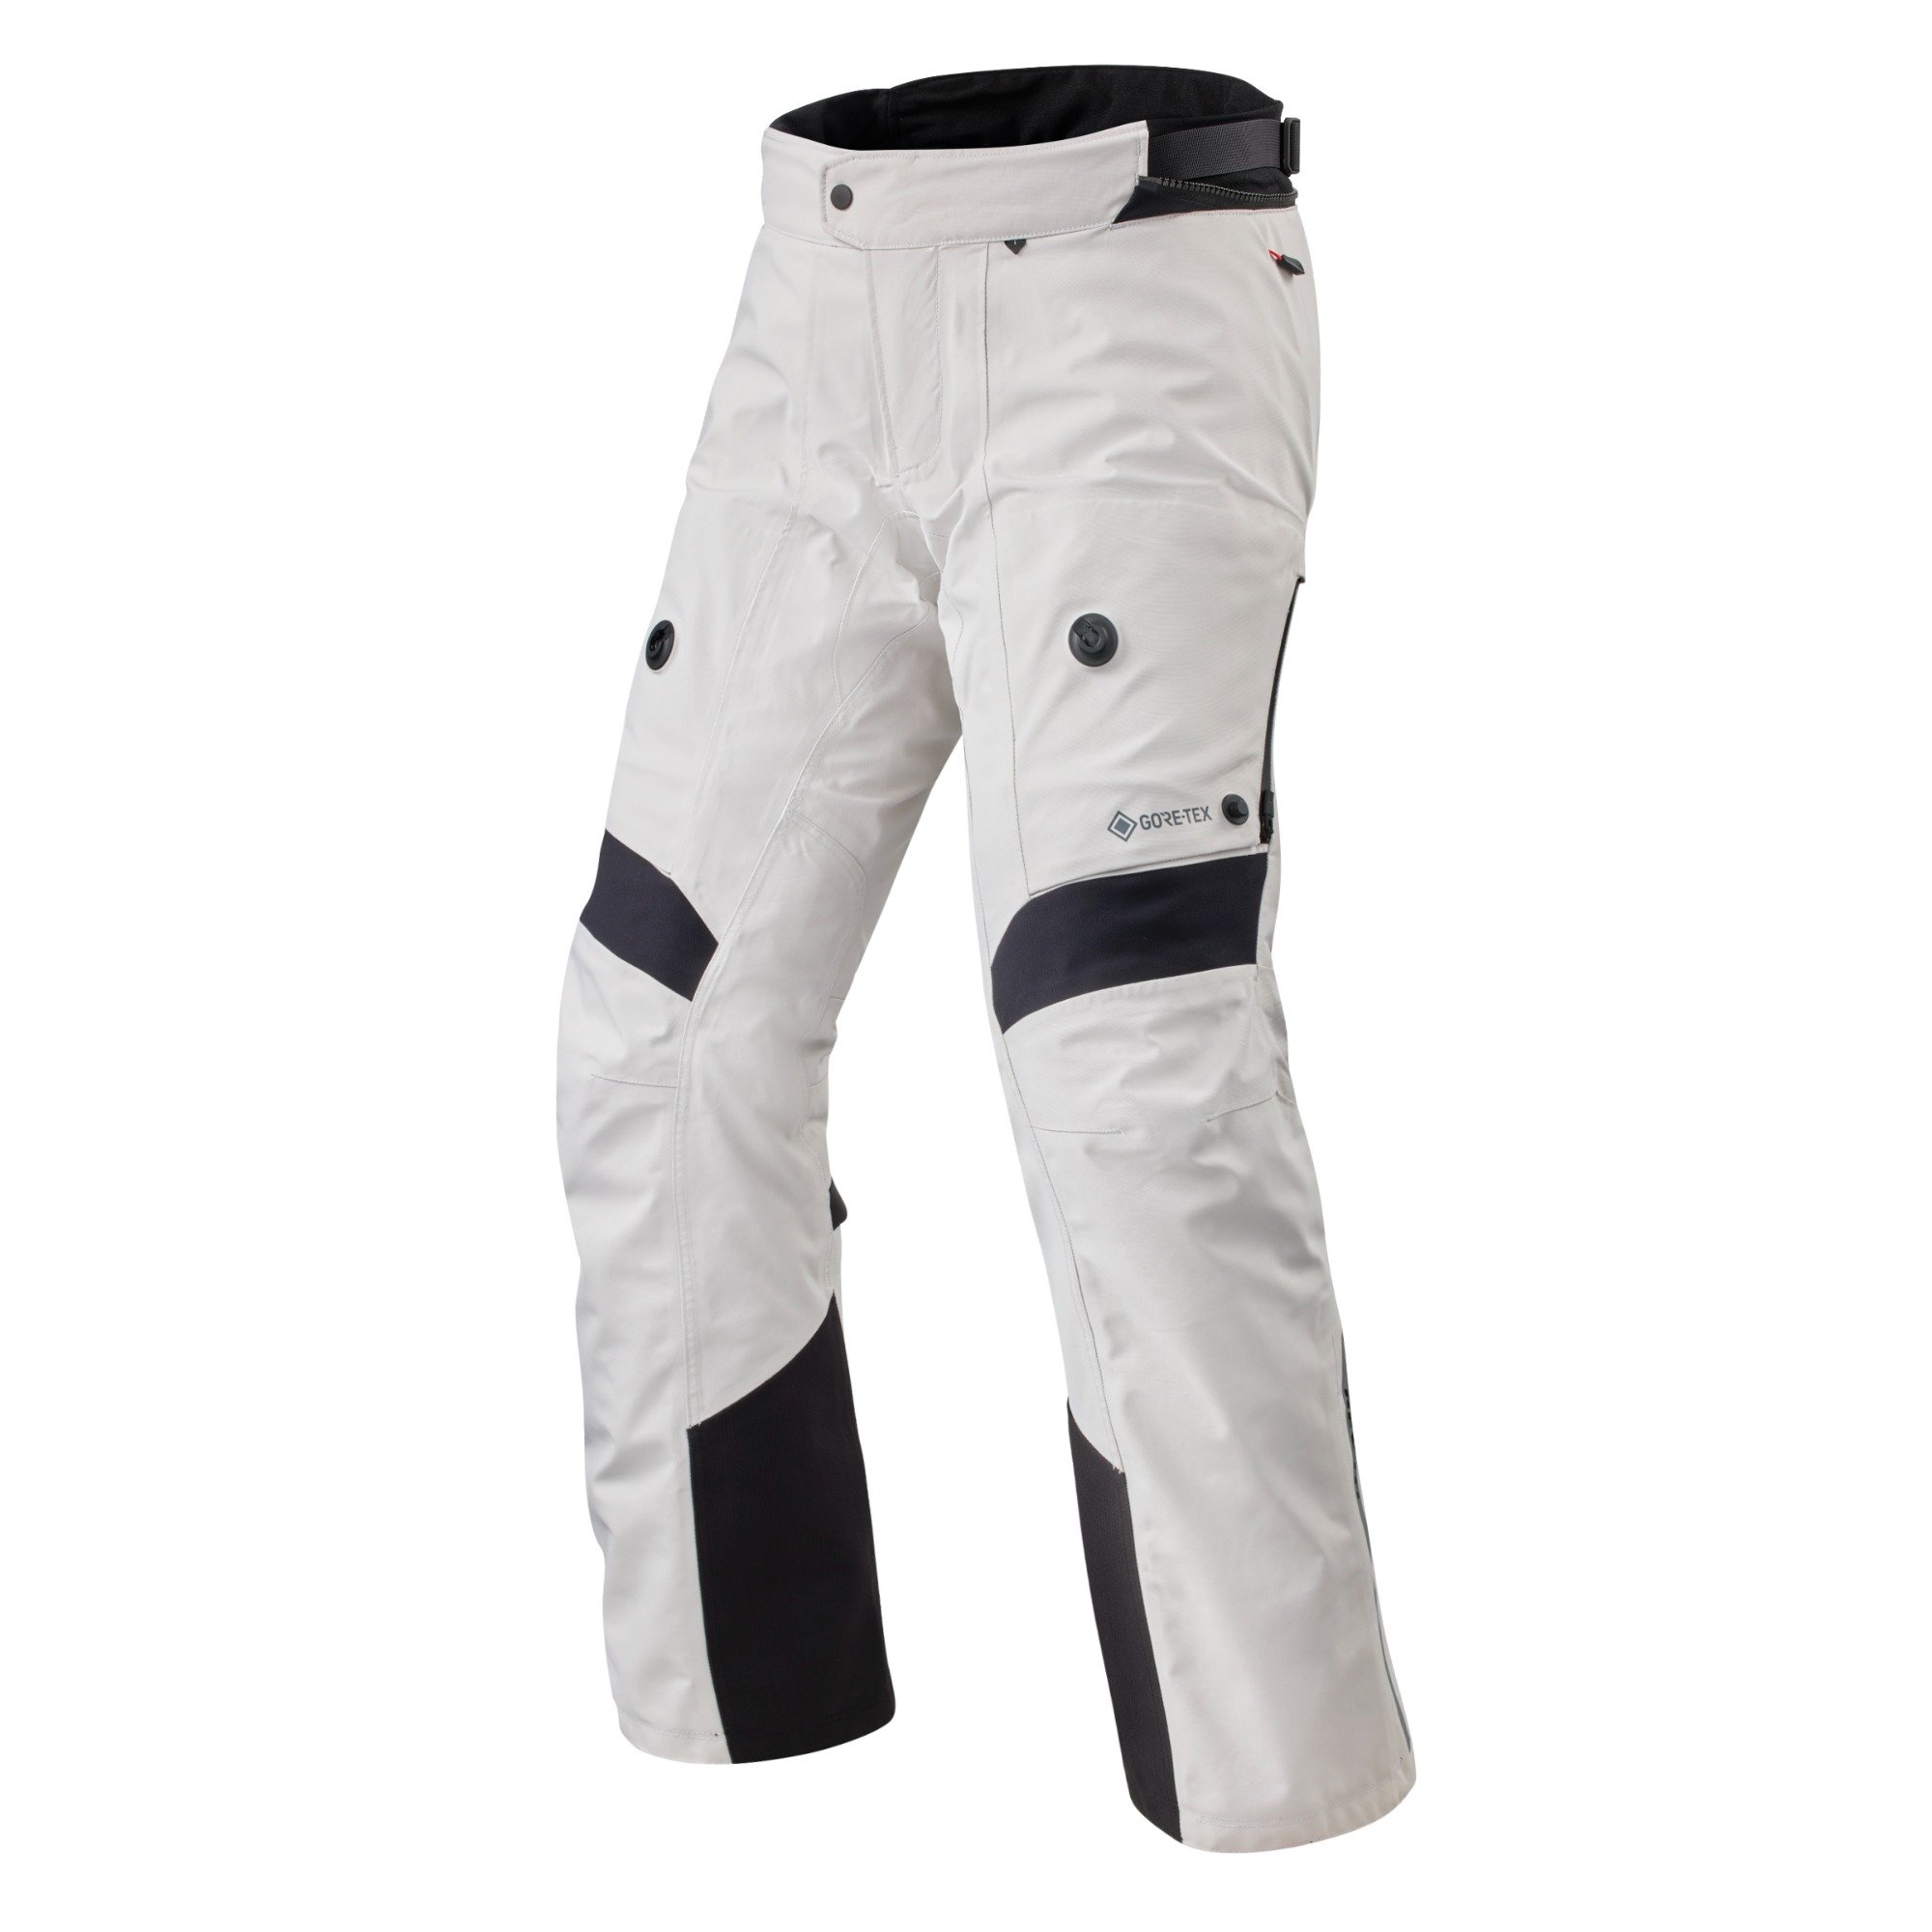 Image of EU REV'IT! Poseidon 3 GTX Argent Noir Long Pantalon Taille XL